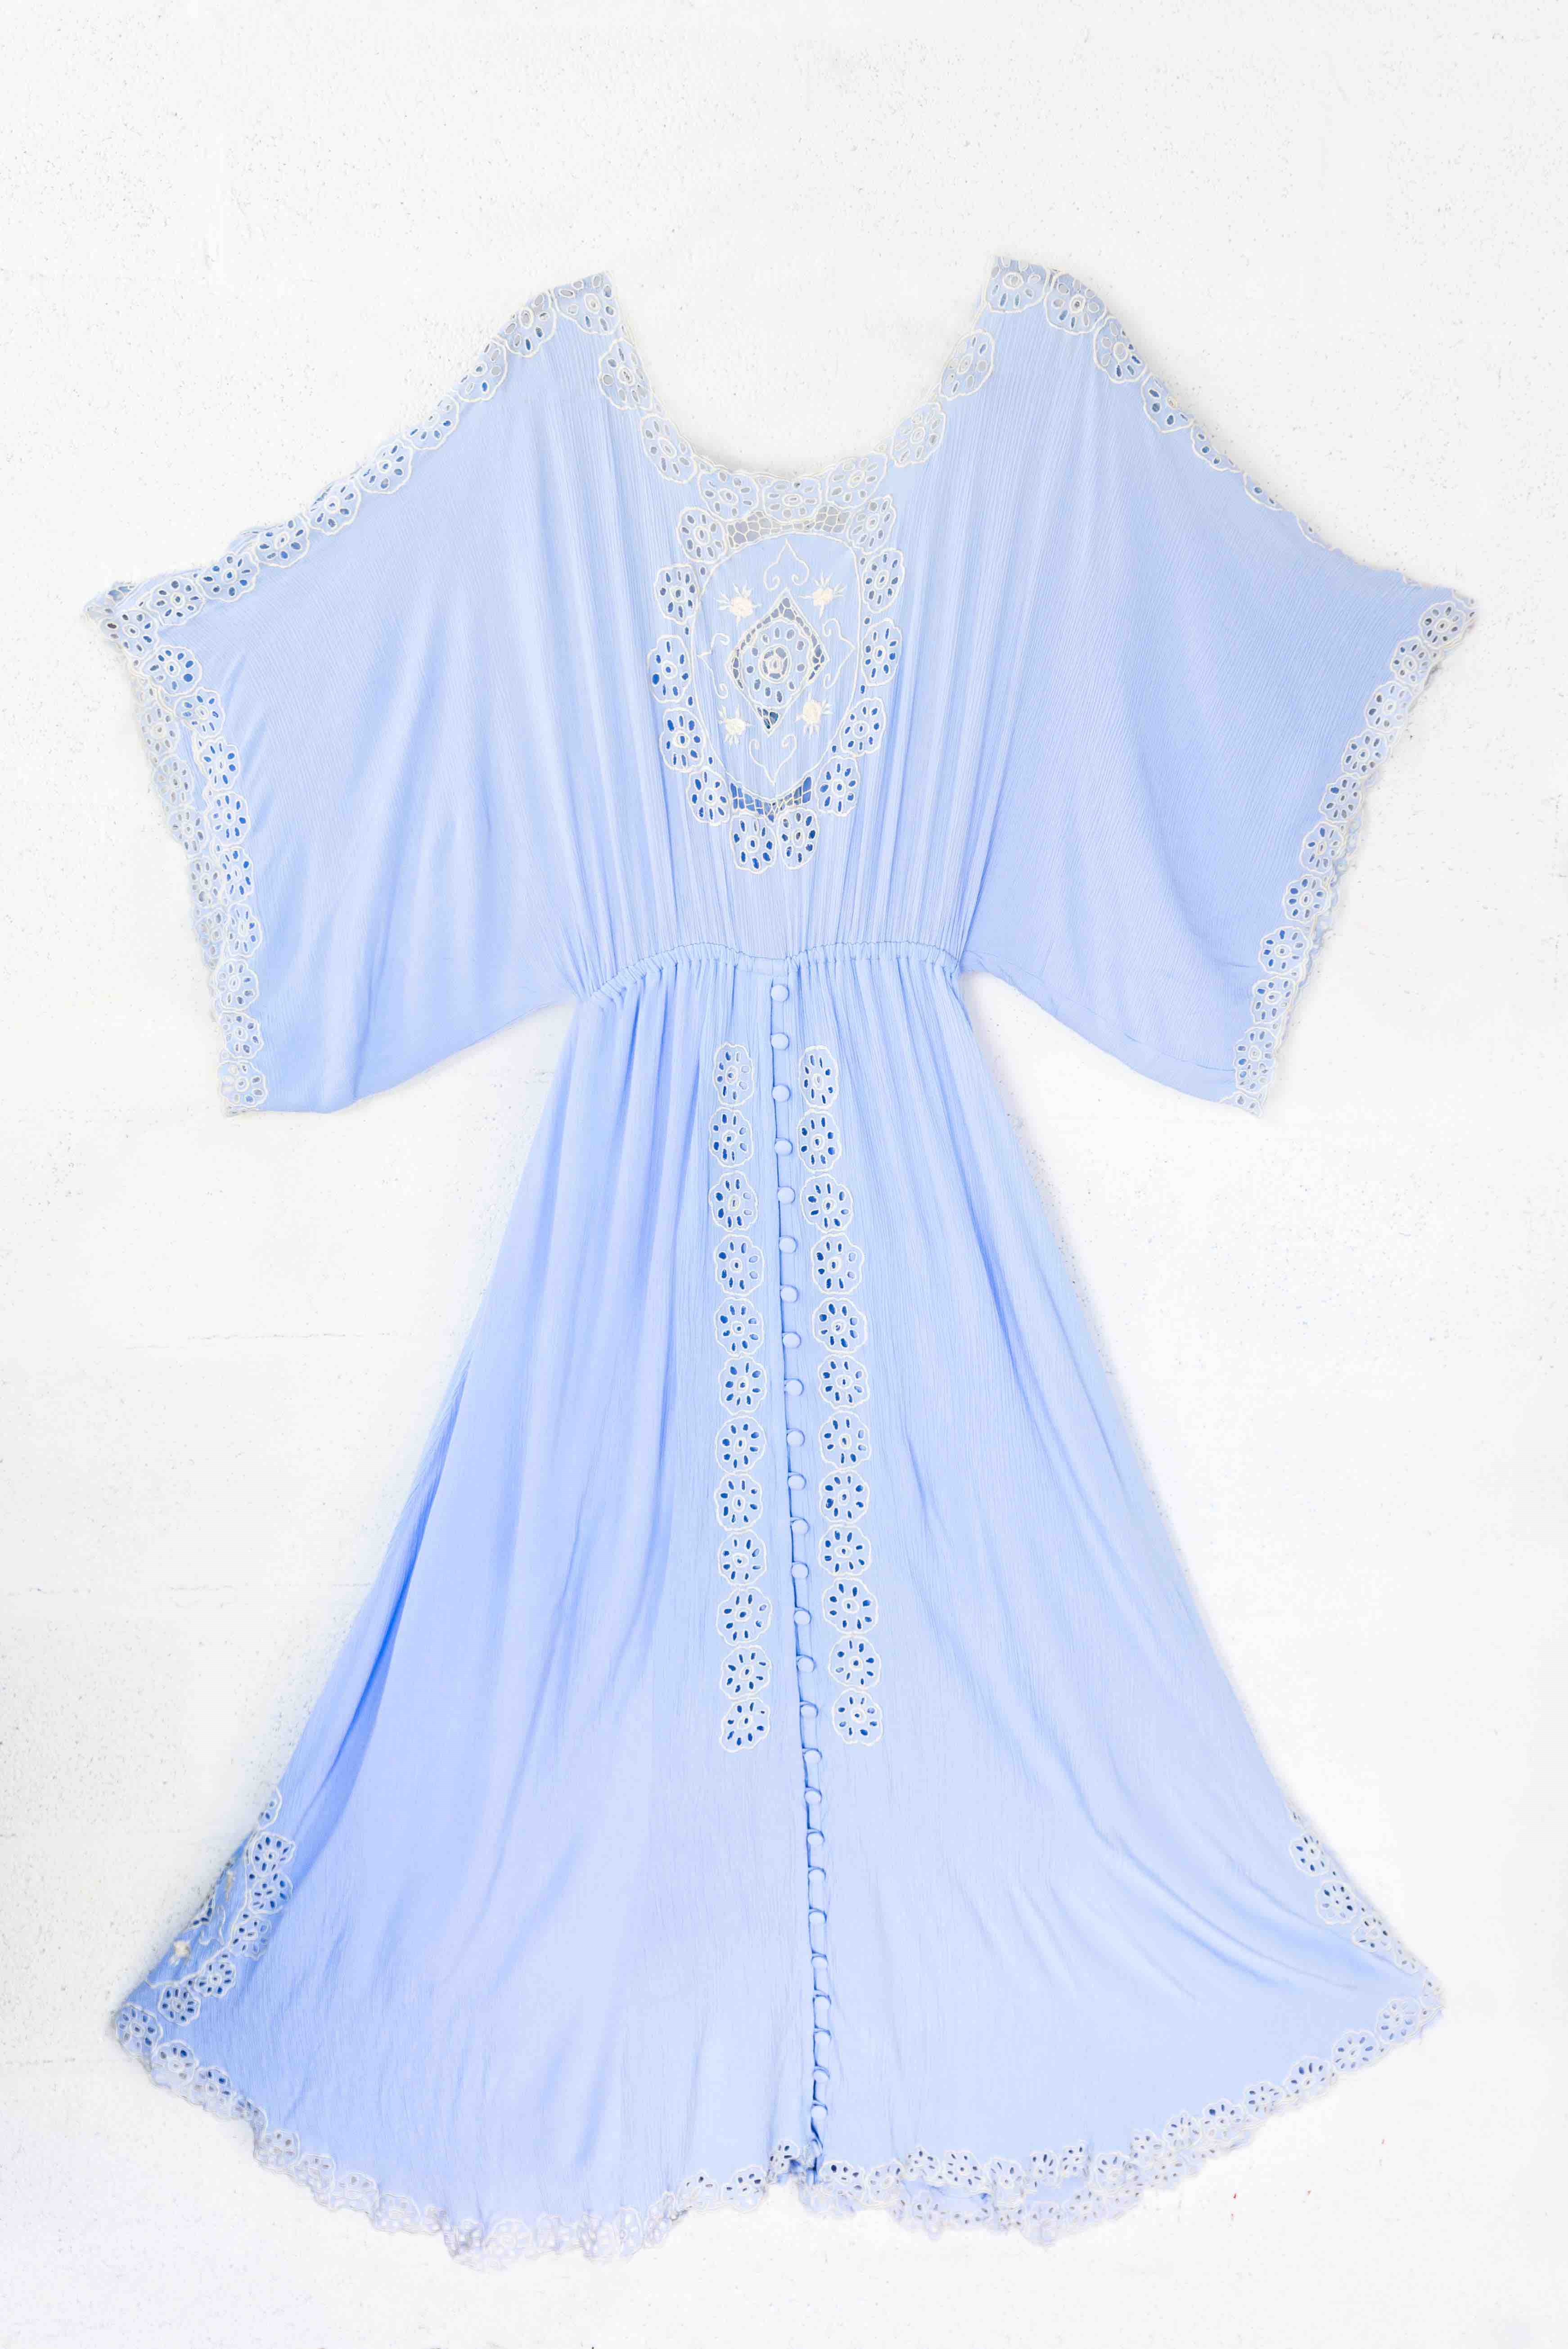 powder blue maxi dress